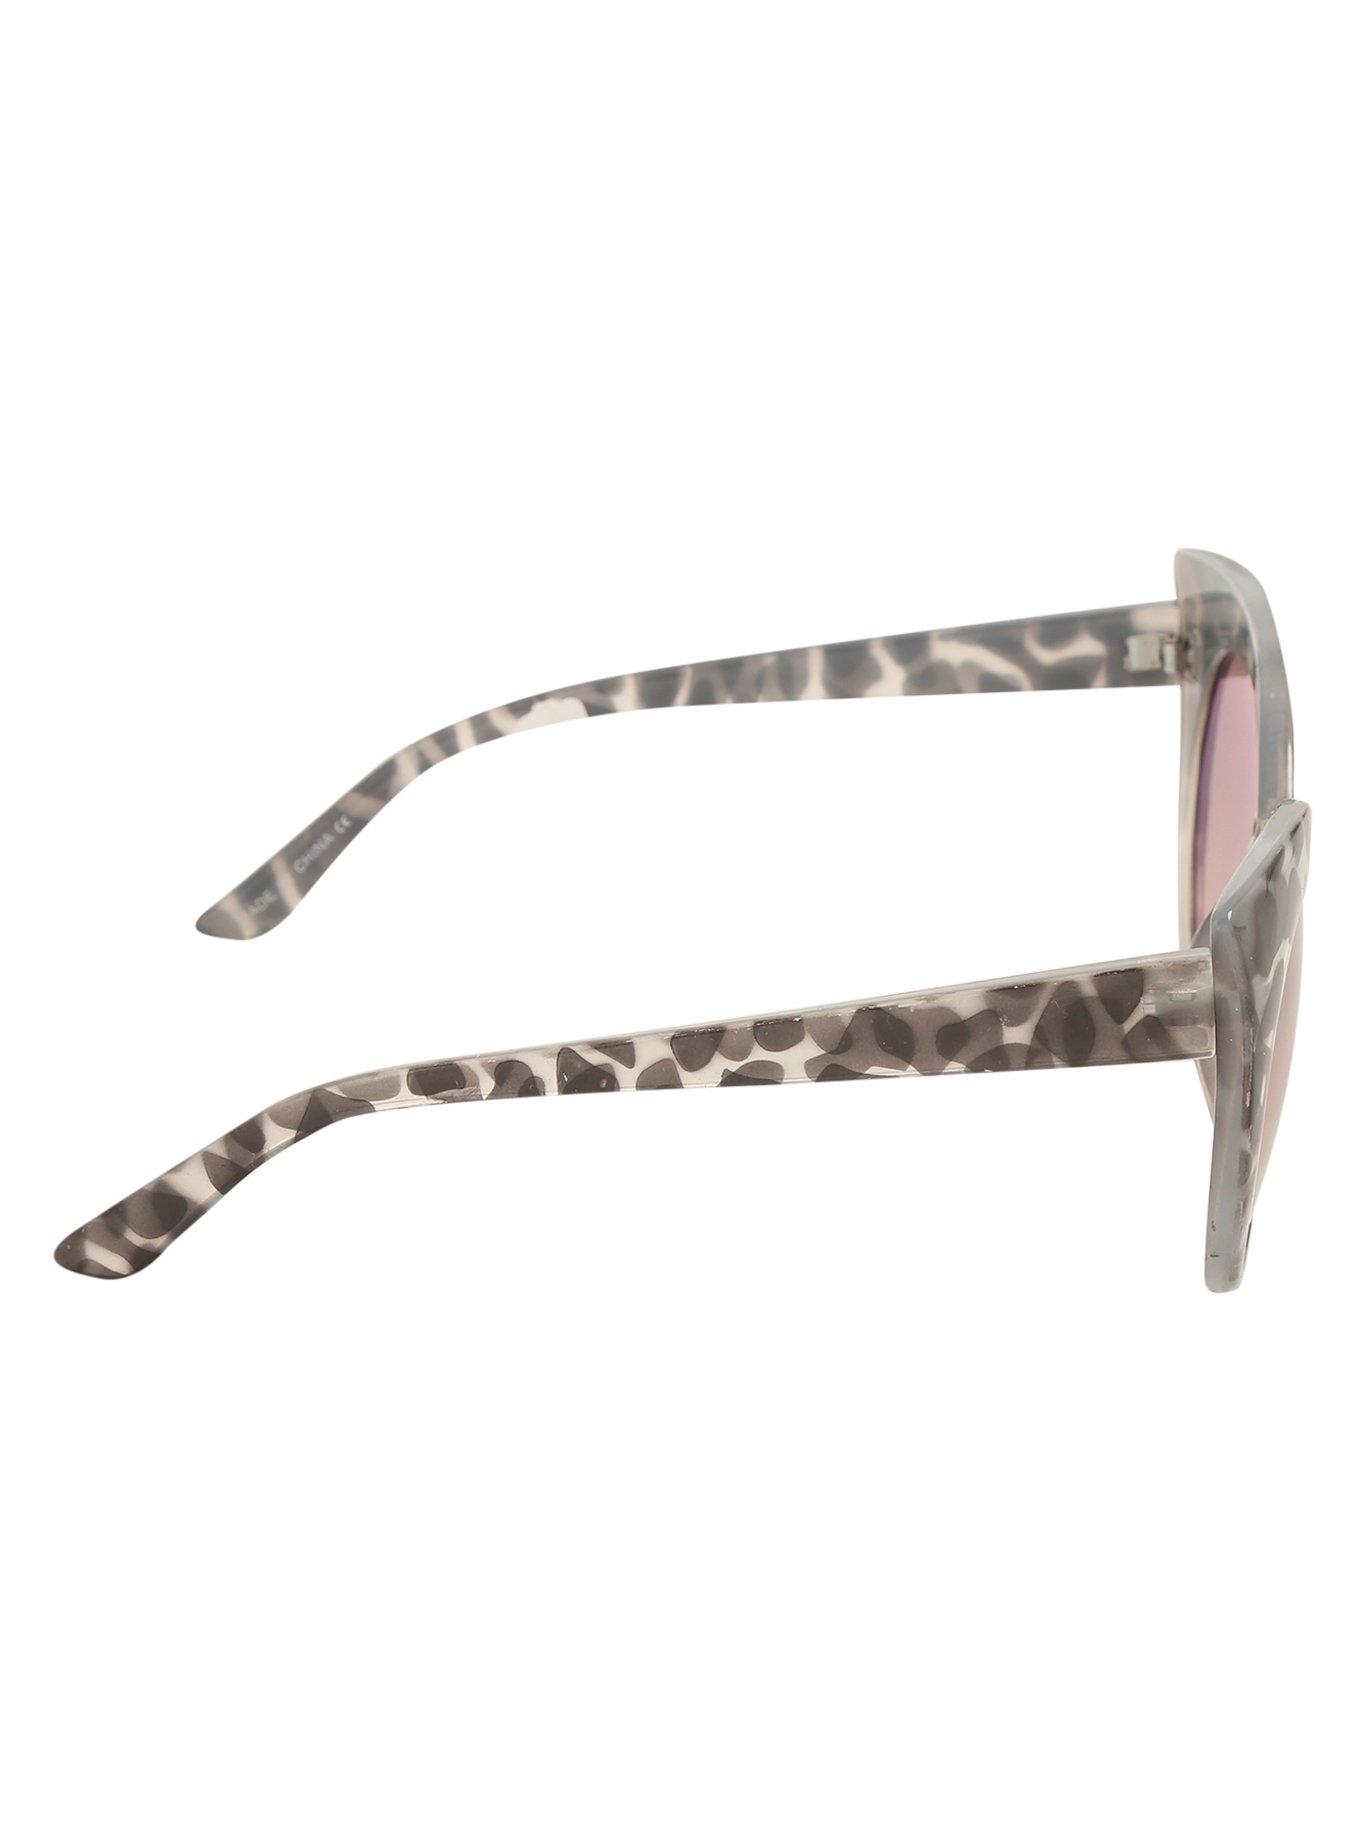 Black And Grey Smoke Cat Eye Gradient Lens Sunglasses, , alternate